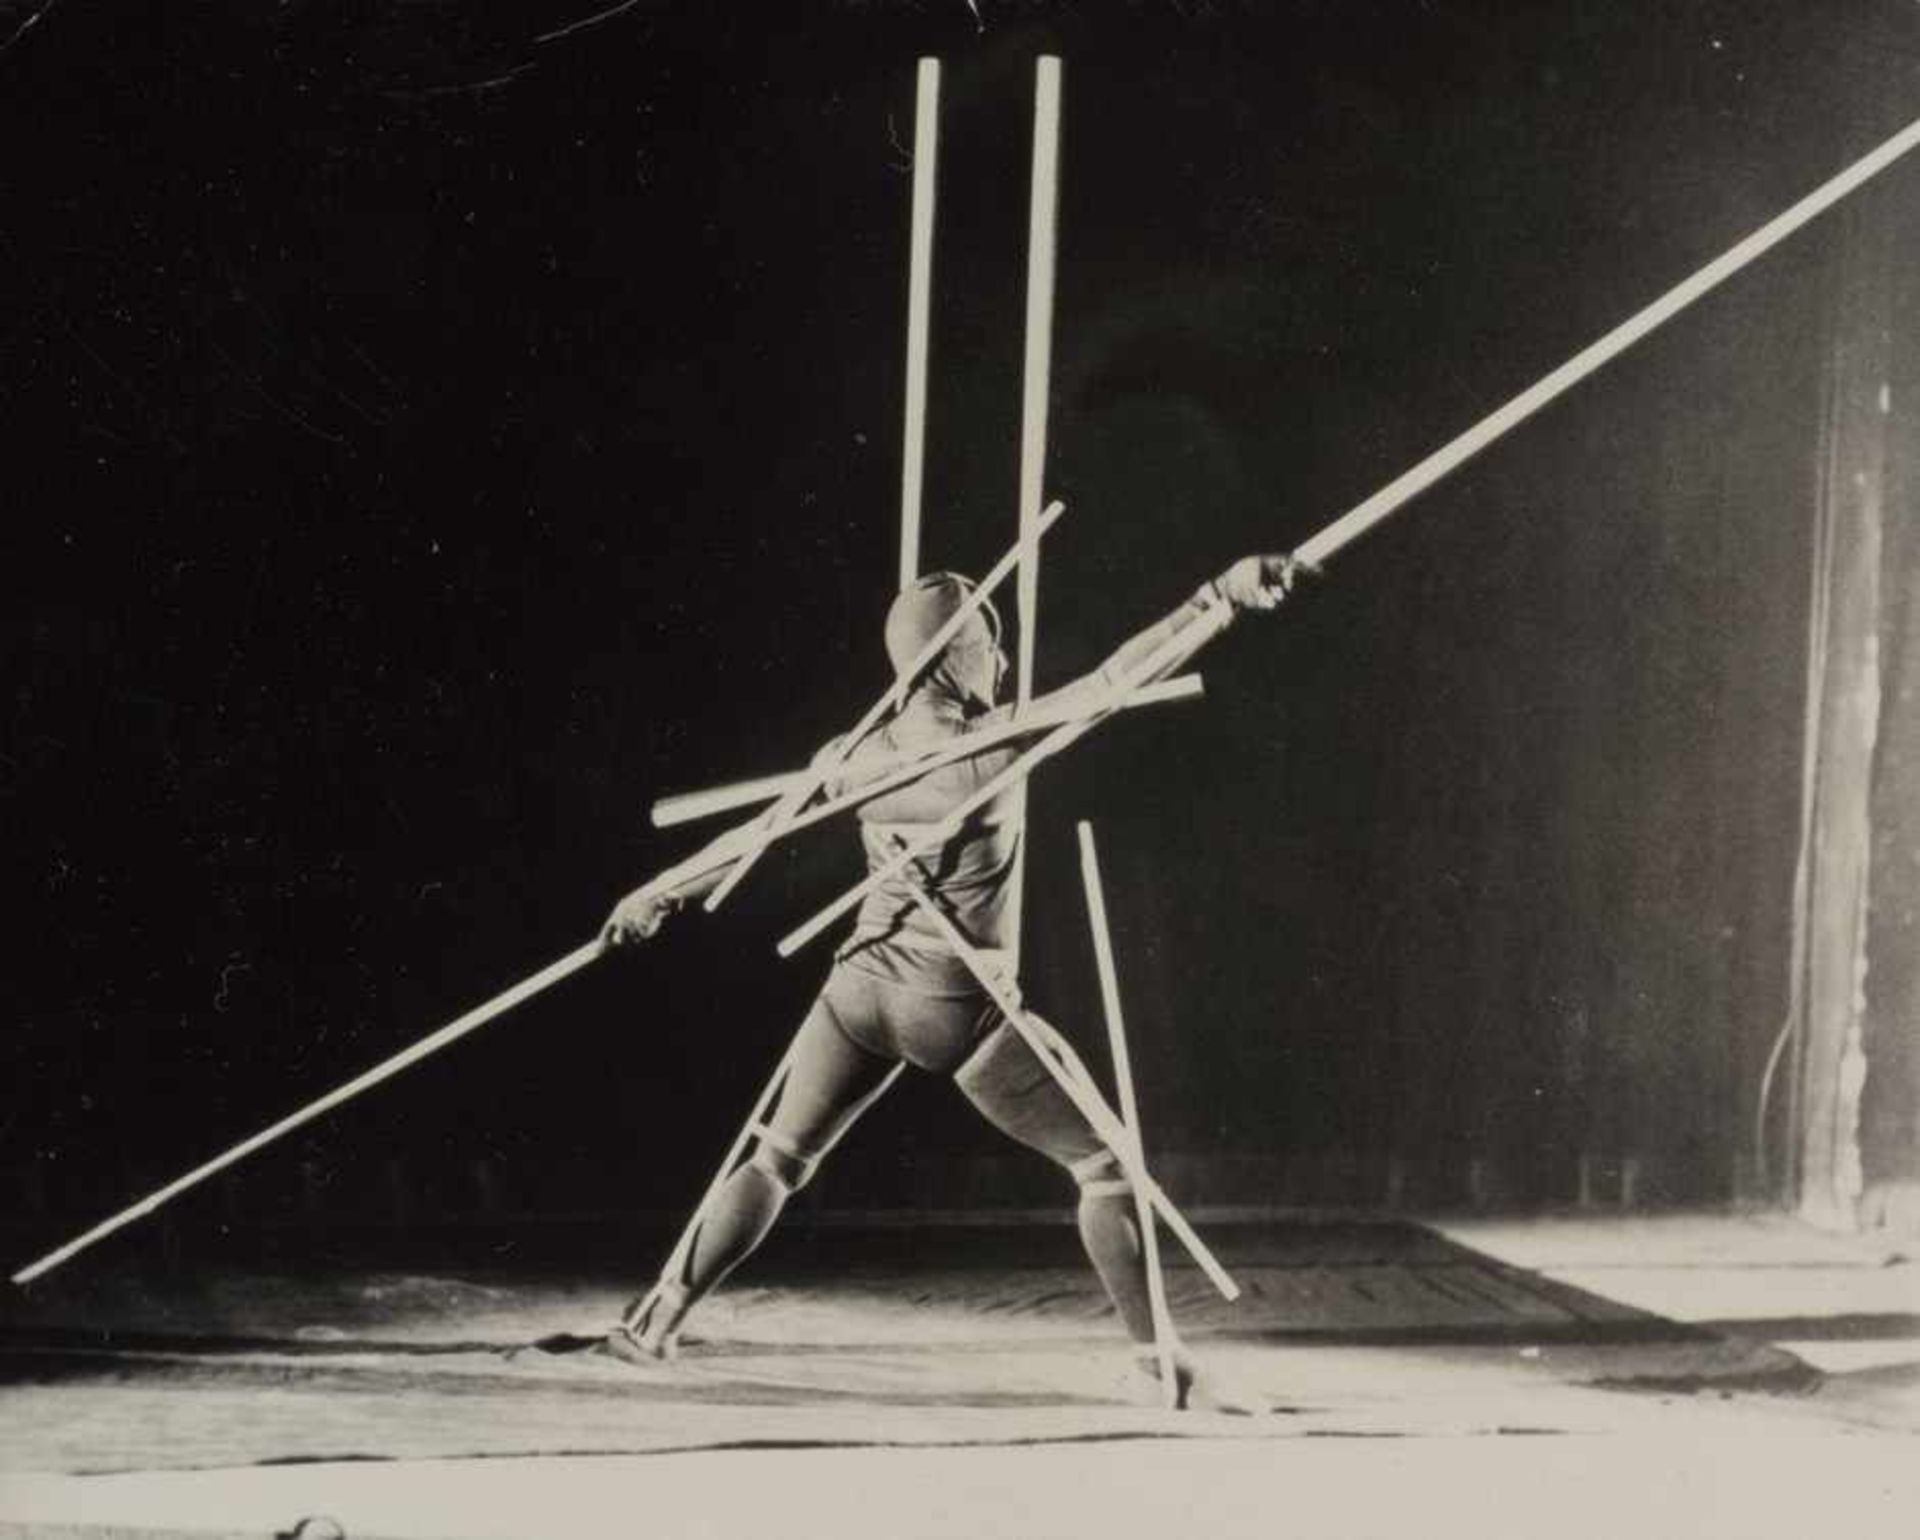 Bauhaus: Triadic Ballet, Stick Dancer, costume by Oskar SchlemmerPhotographer possibly Ernst